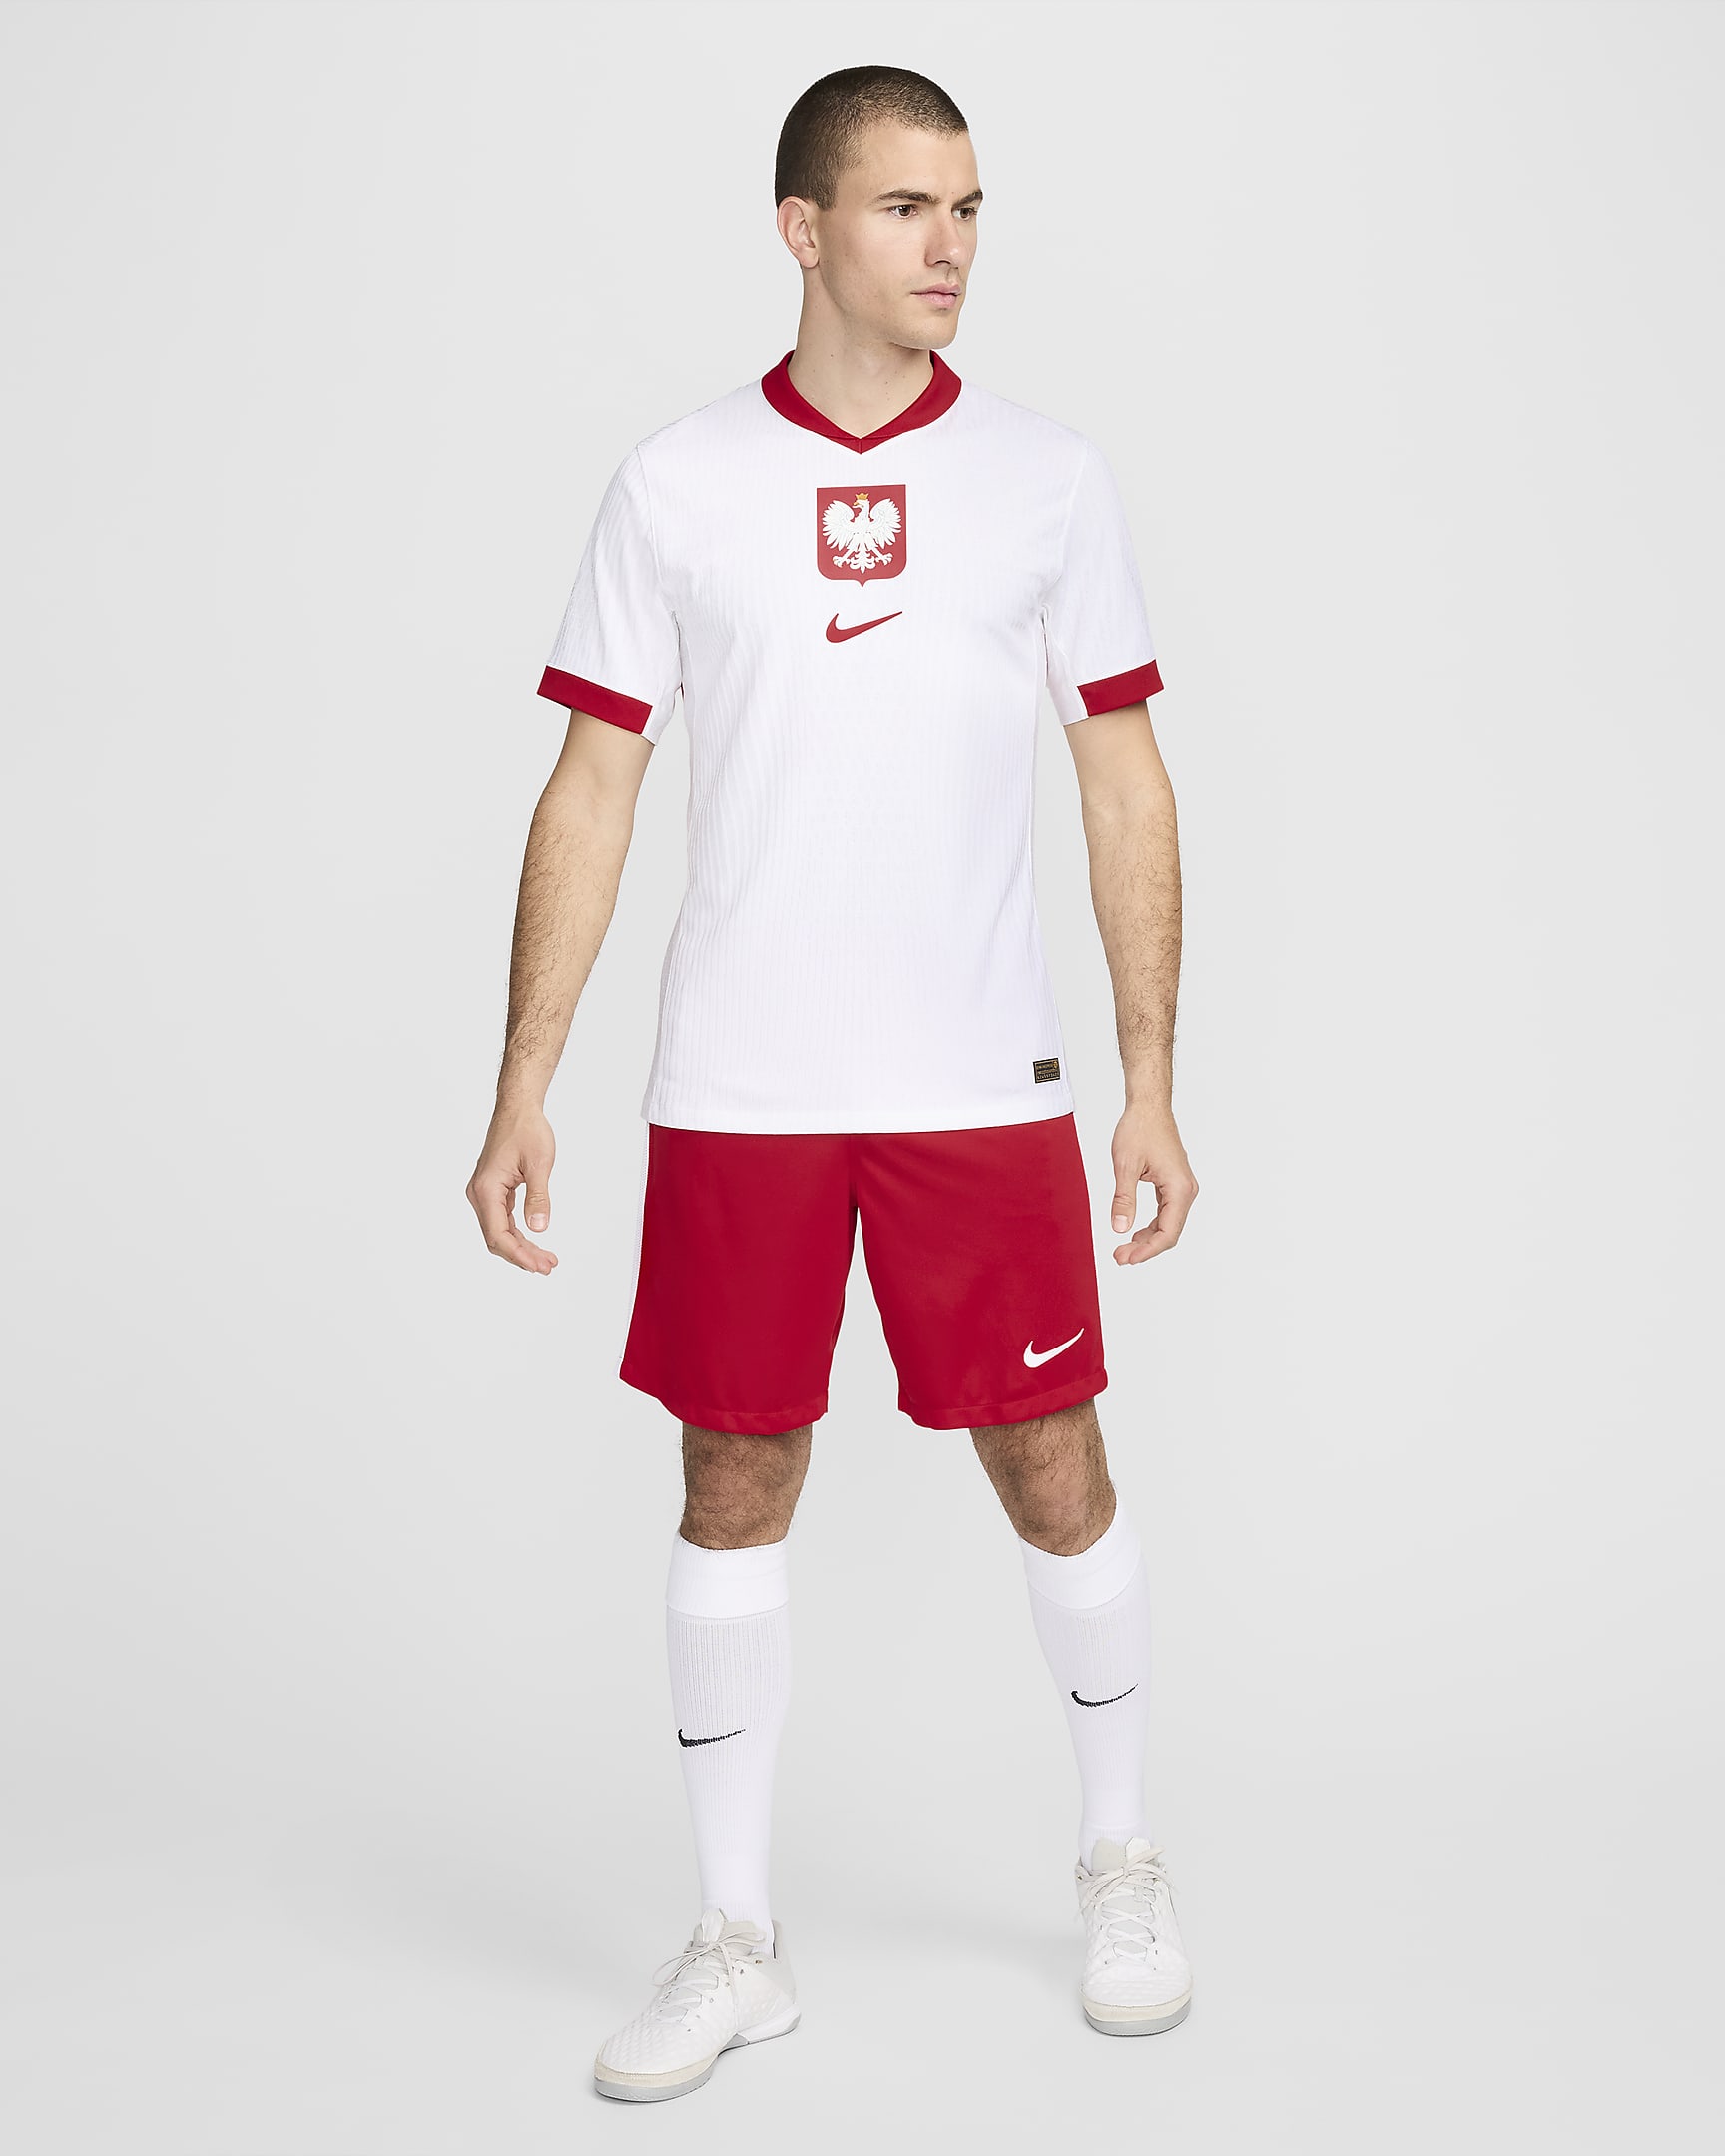 Poland 2024 25 Match Home Dri Fit Adv Football Authentic Short Sleeve Shirt 7T2Cm5 